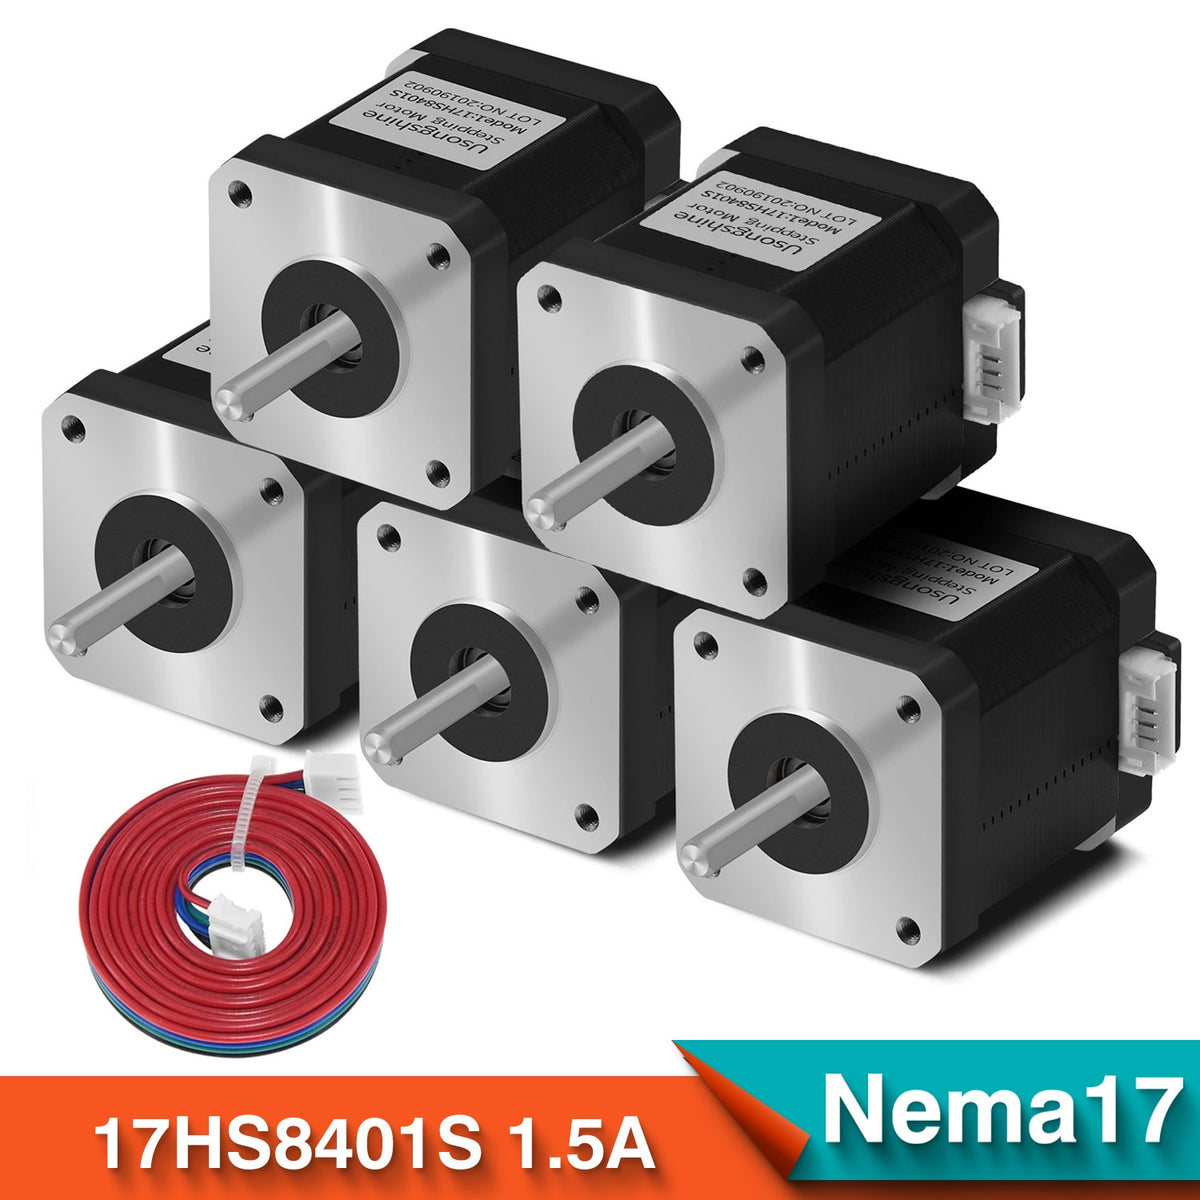 5pcs Nema 17 4-lead Stepper Motor 42 Motor 17HS8401S 1.5A CE ROSH ISO CNC Laser and 3D printer motor